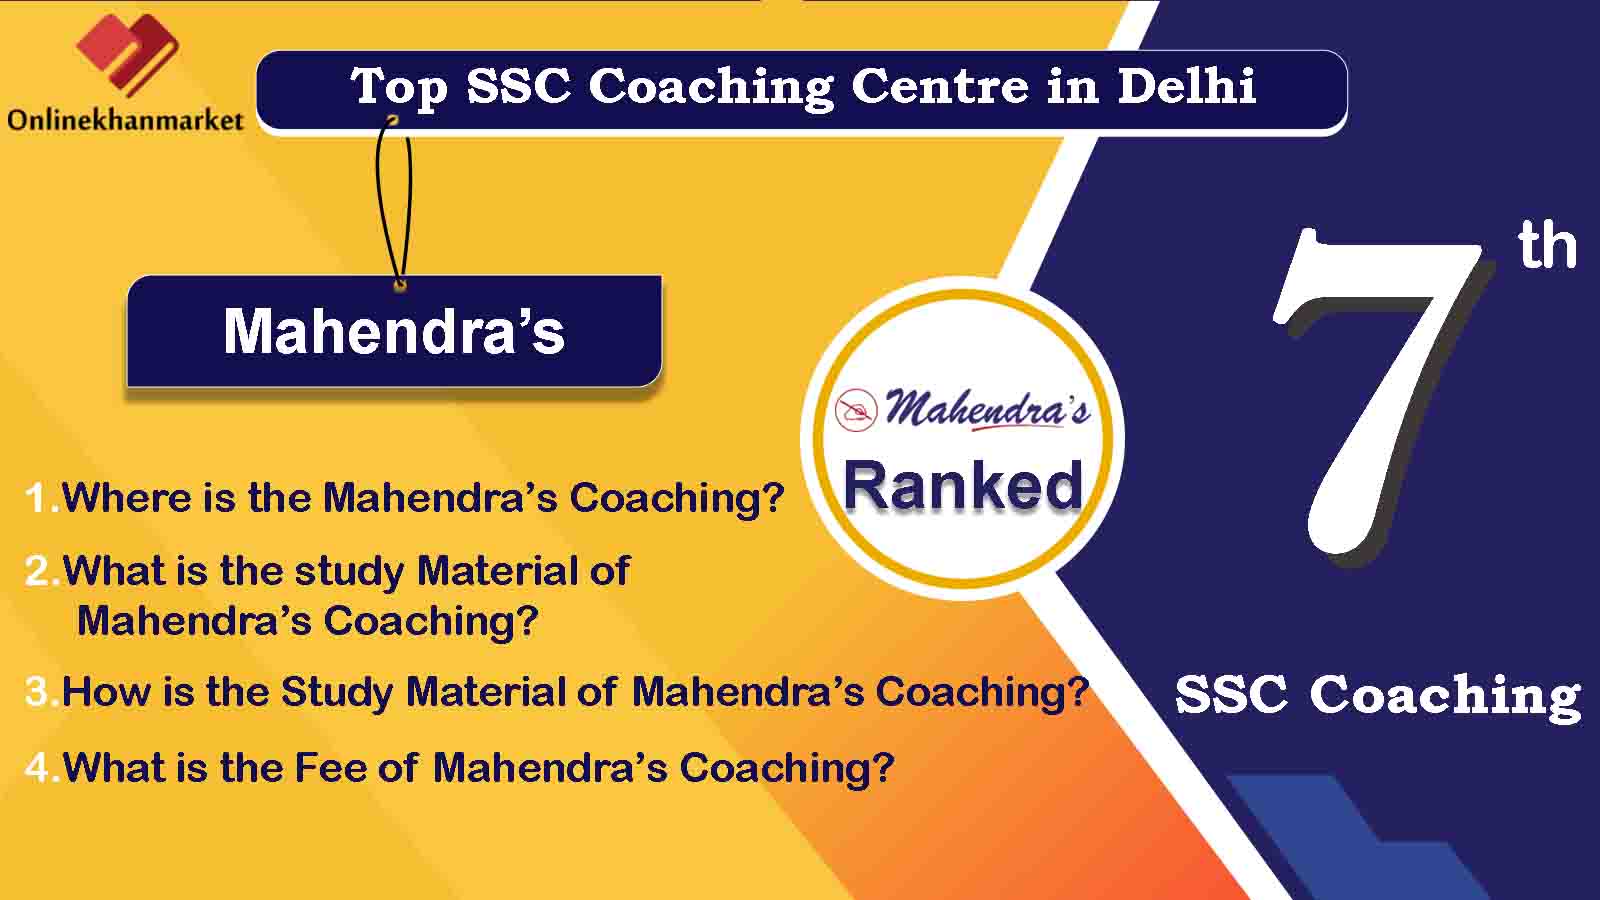 Top SSC Coaching in Delhi